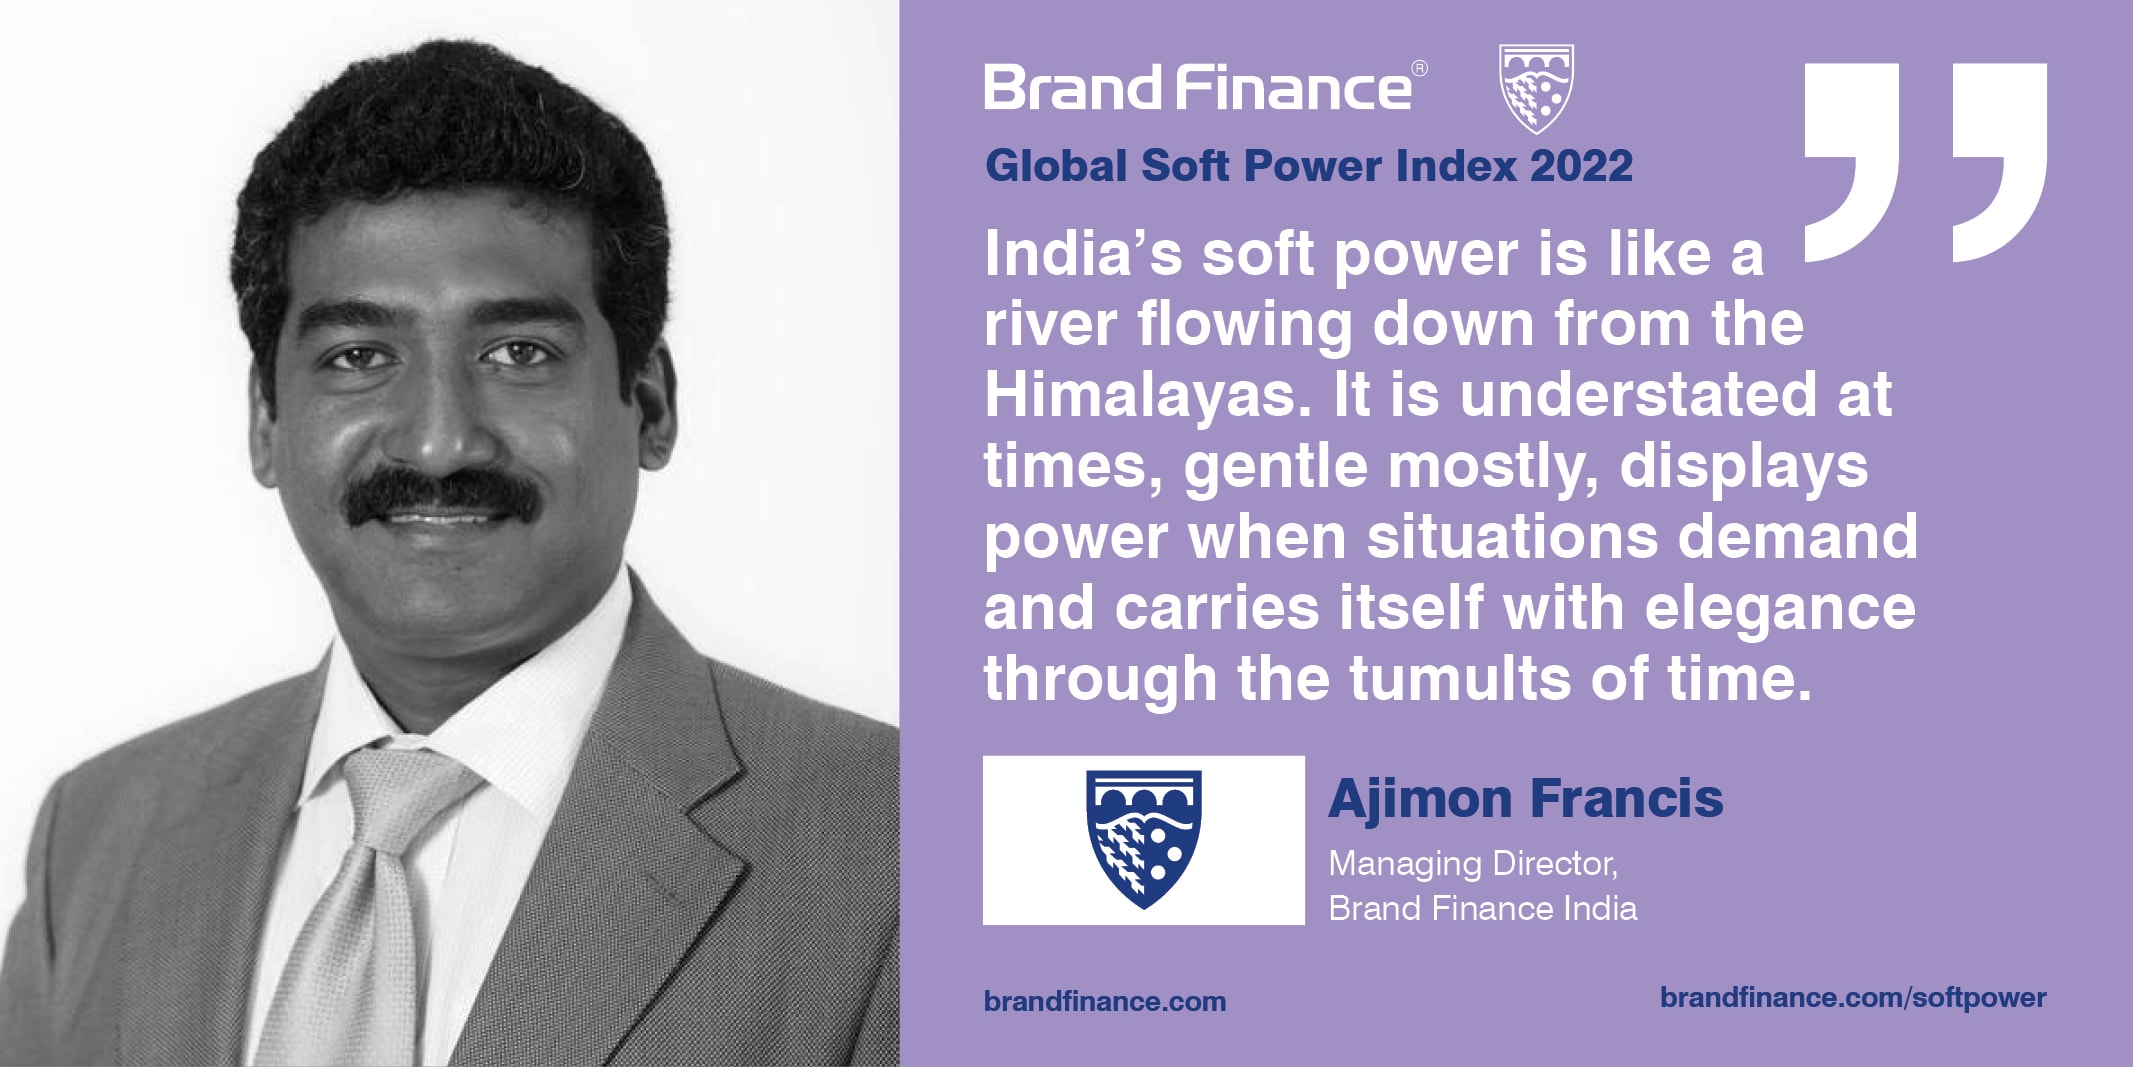 Ajimon Francis, Managing Director, Brand Finance India